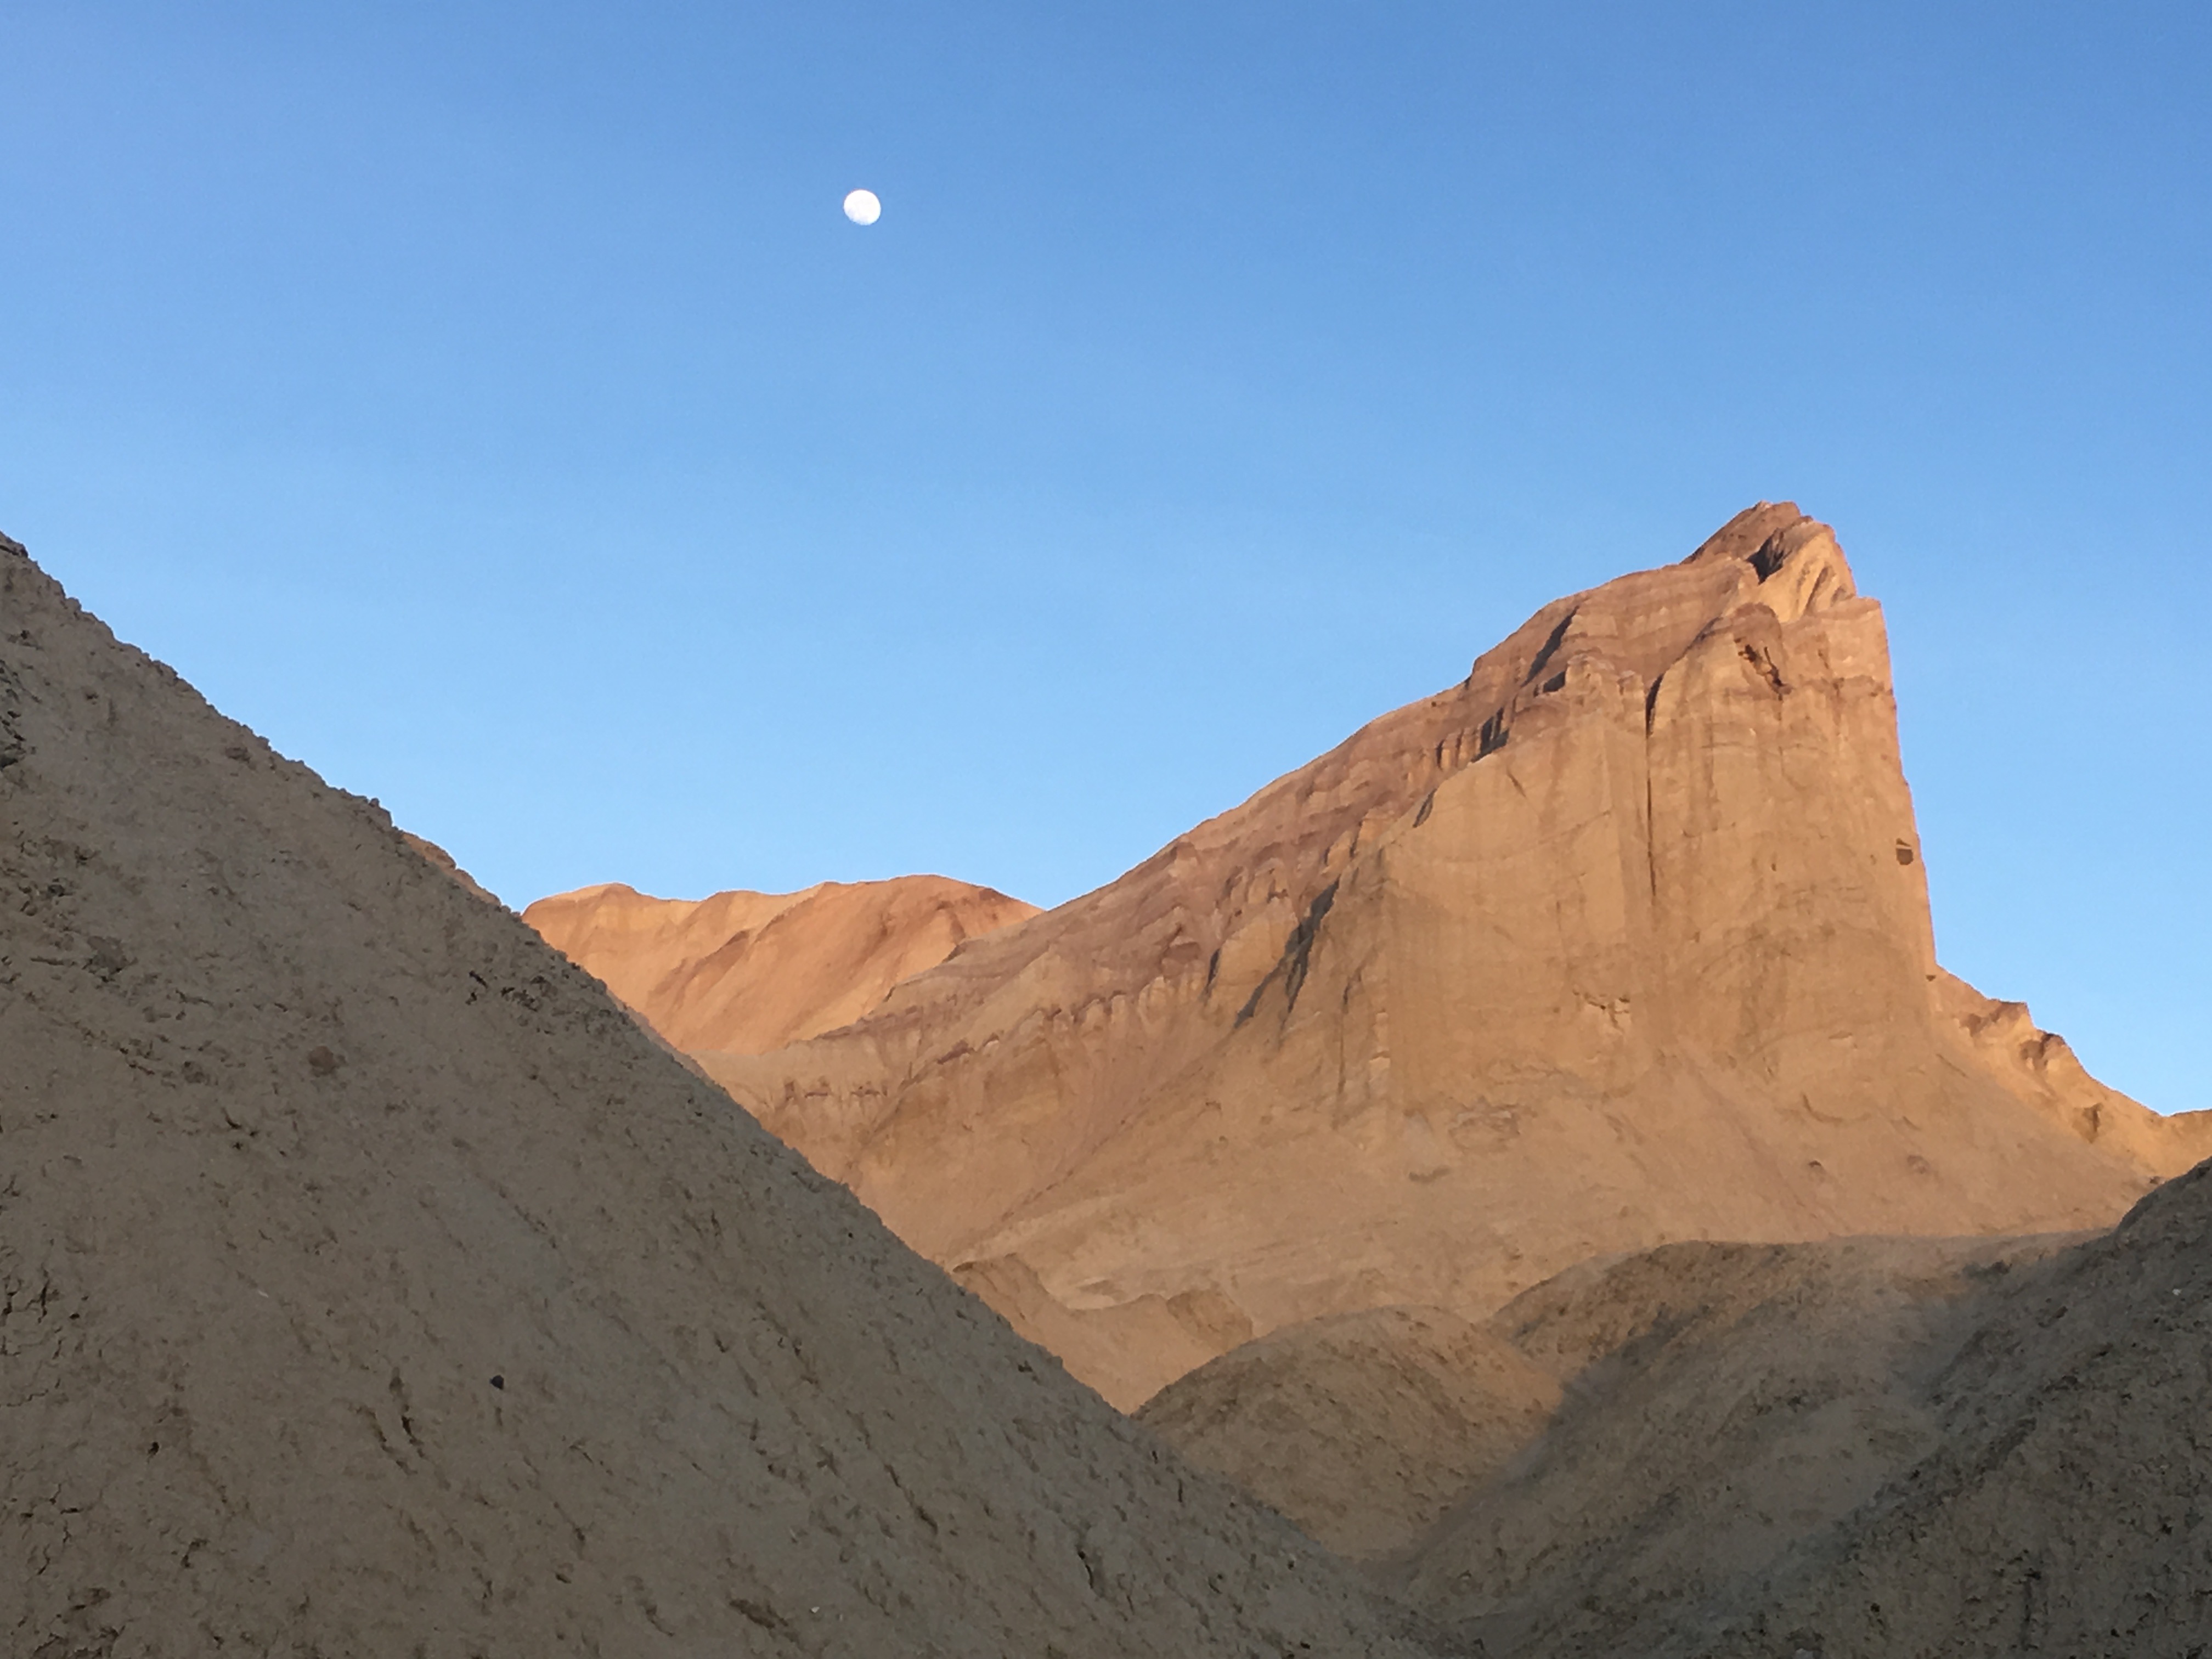 A Hike to the Bad Lands through Zabriskie Point in Death Valley…
03/09/17